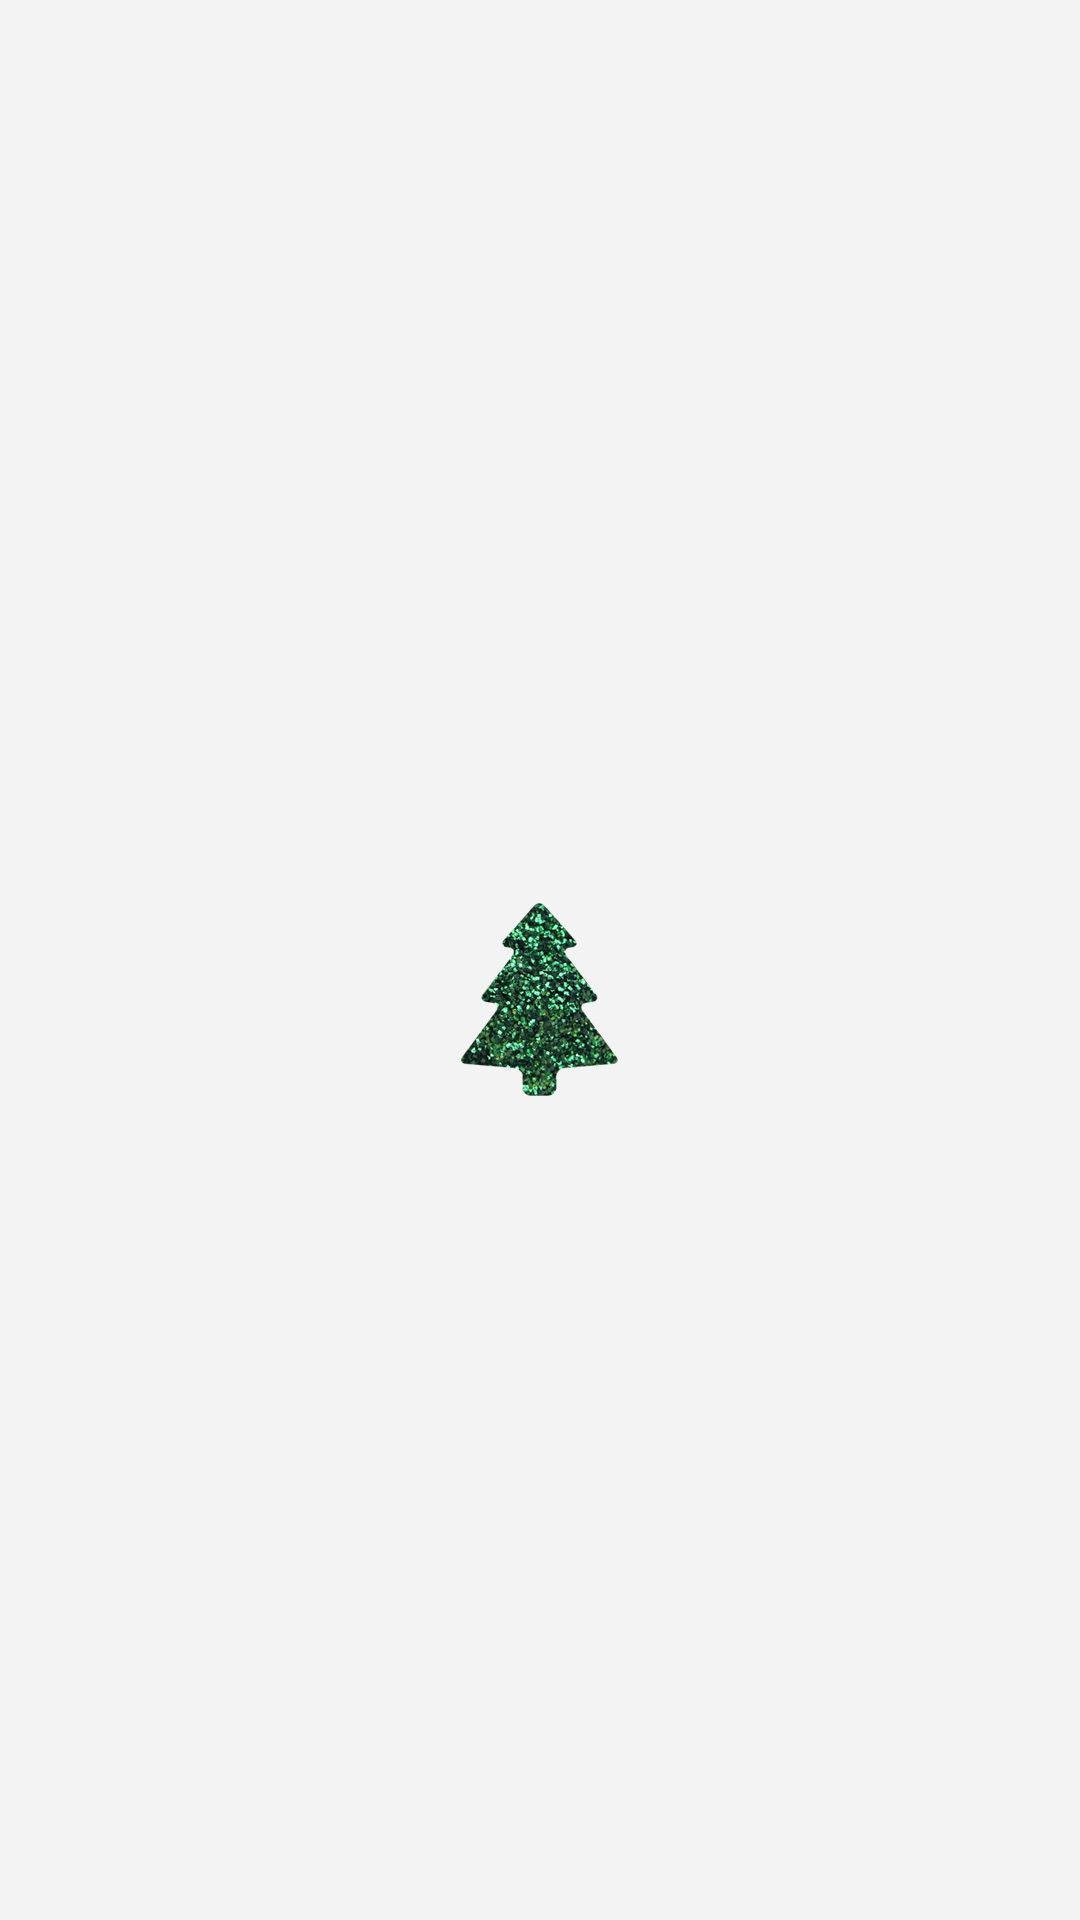 Enkelsöt Jul-iphone-enkelträd. Wallpaper